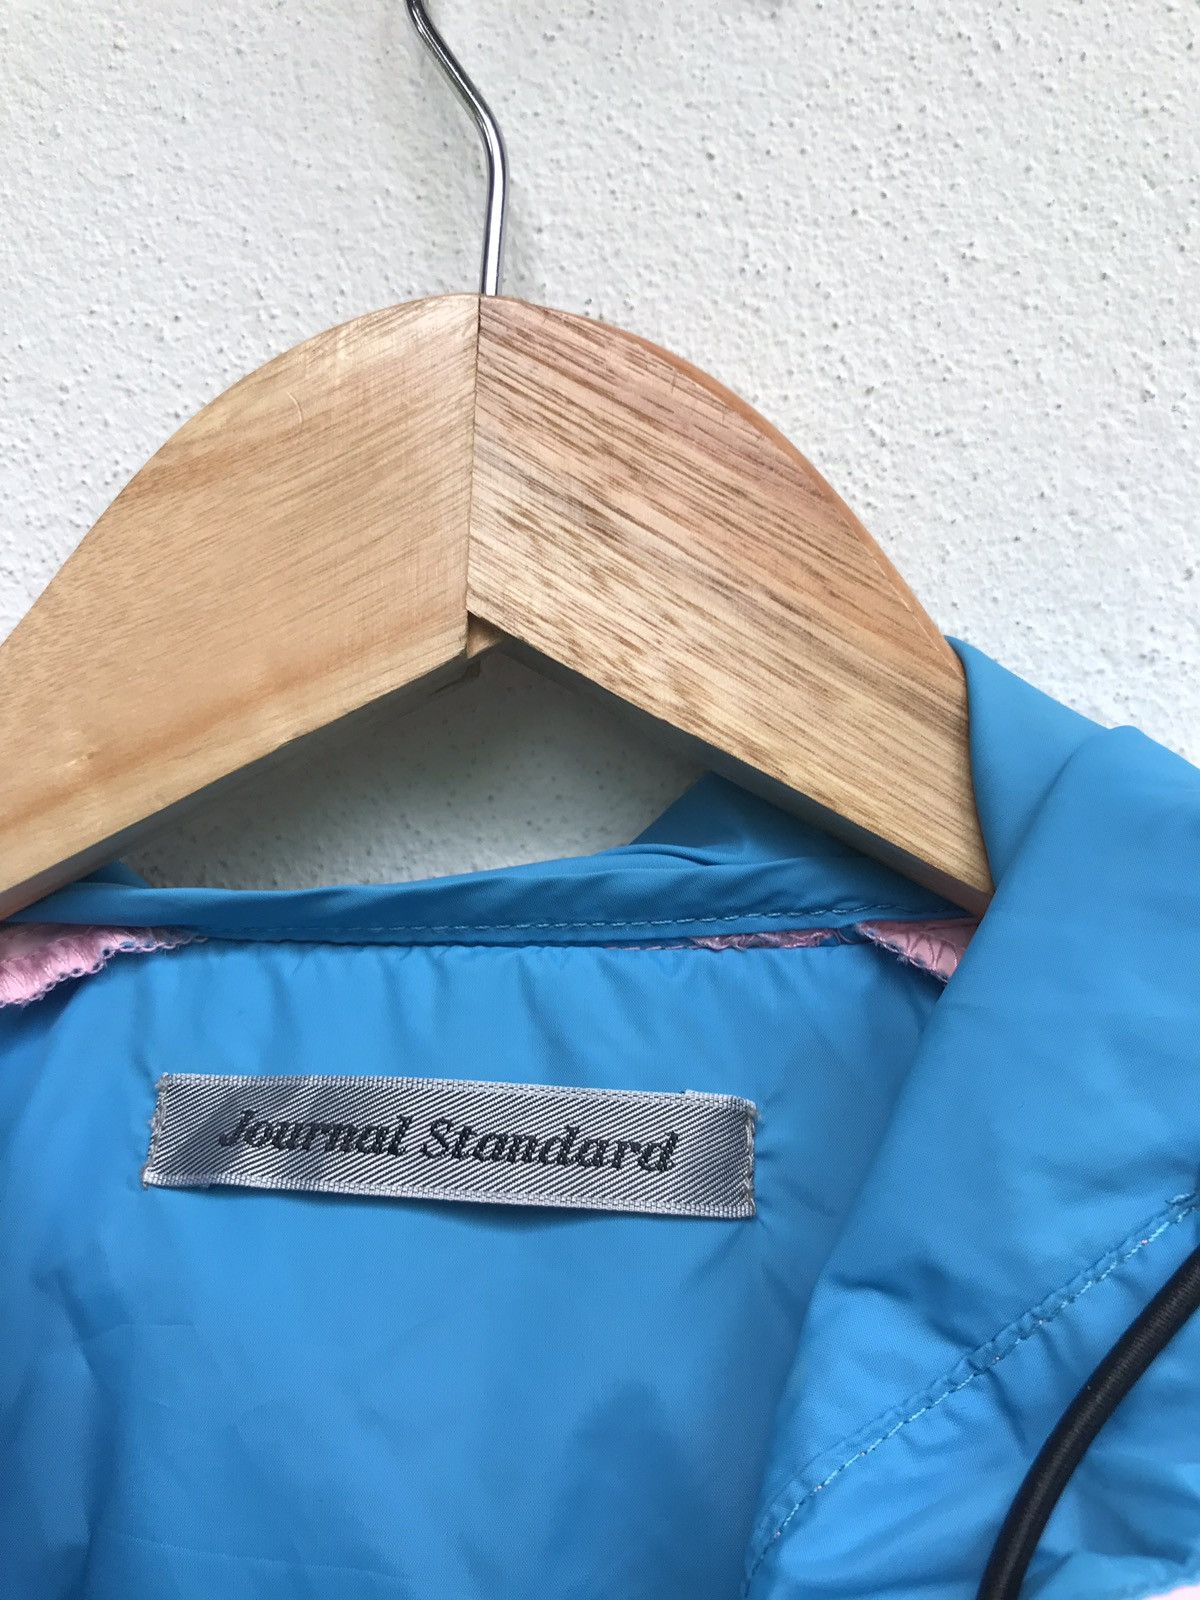 Journal Standard Japanese Designer Journal Standard Light Jacket Size US M / EU 48-50 / 2 - 8 Thumbnail